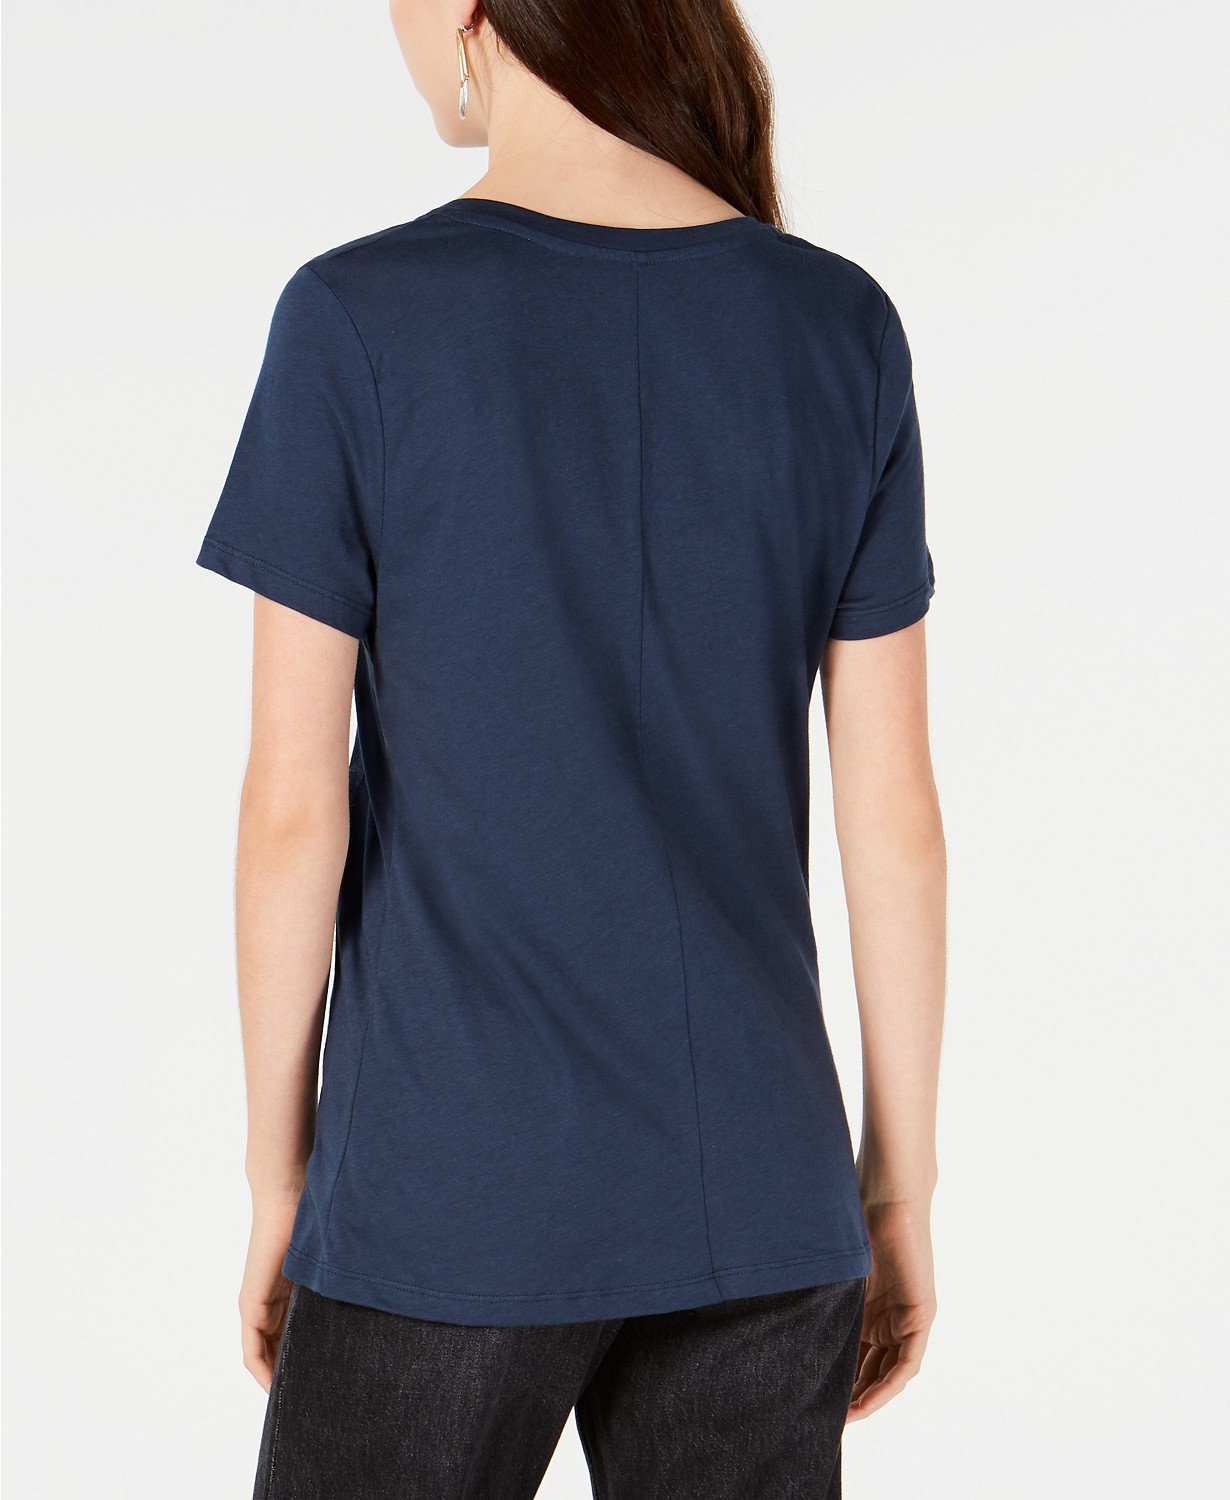 Carbon Copy Embroidered Stars T-Shirt Dark Blue M - 